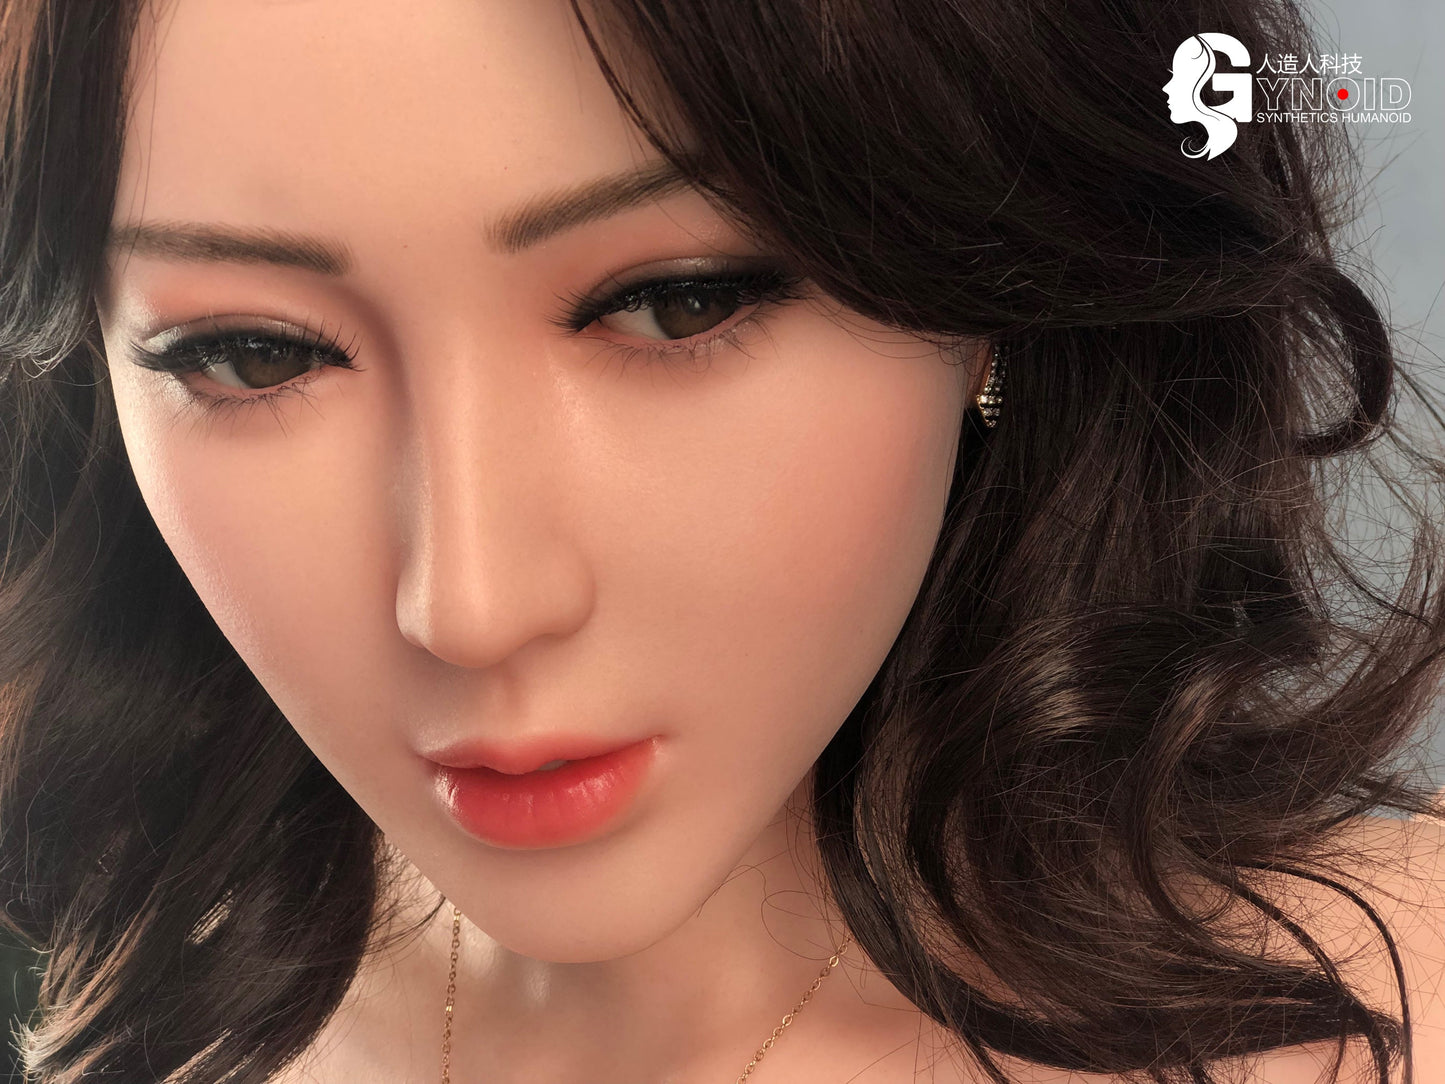 Gynoid Model 6 - Xiang - Love Dolls 4U